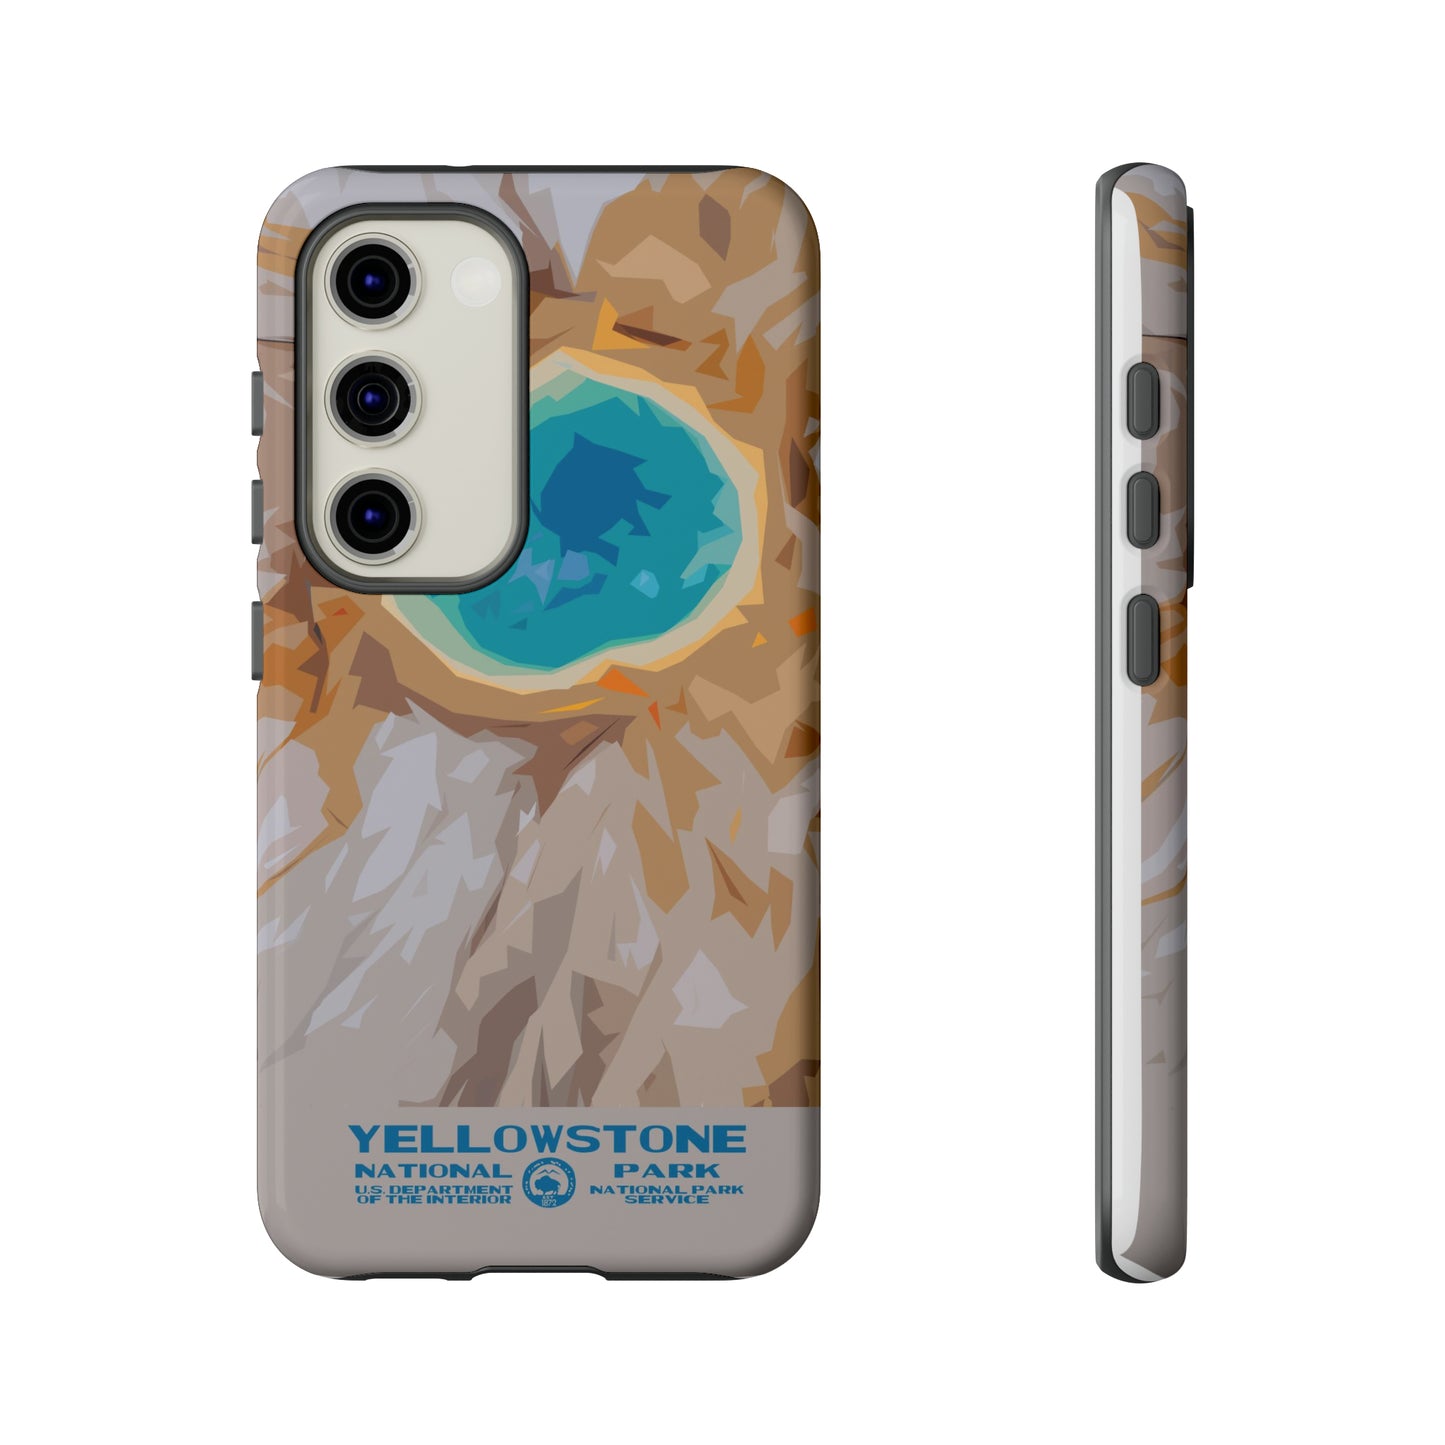 Yellowstone National Park Phone Case